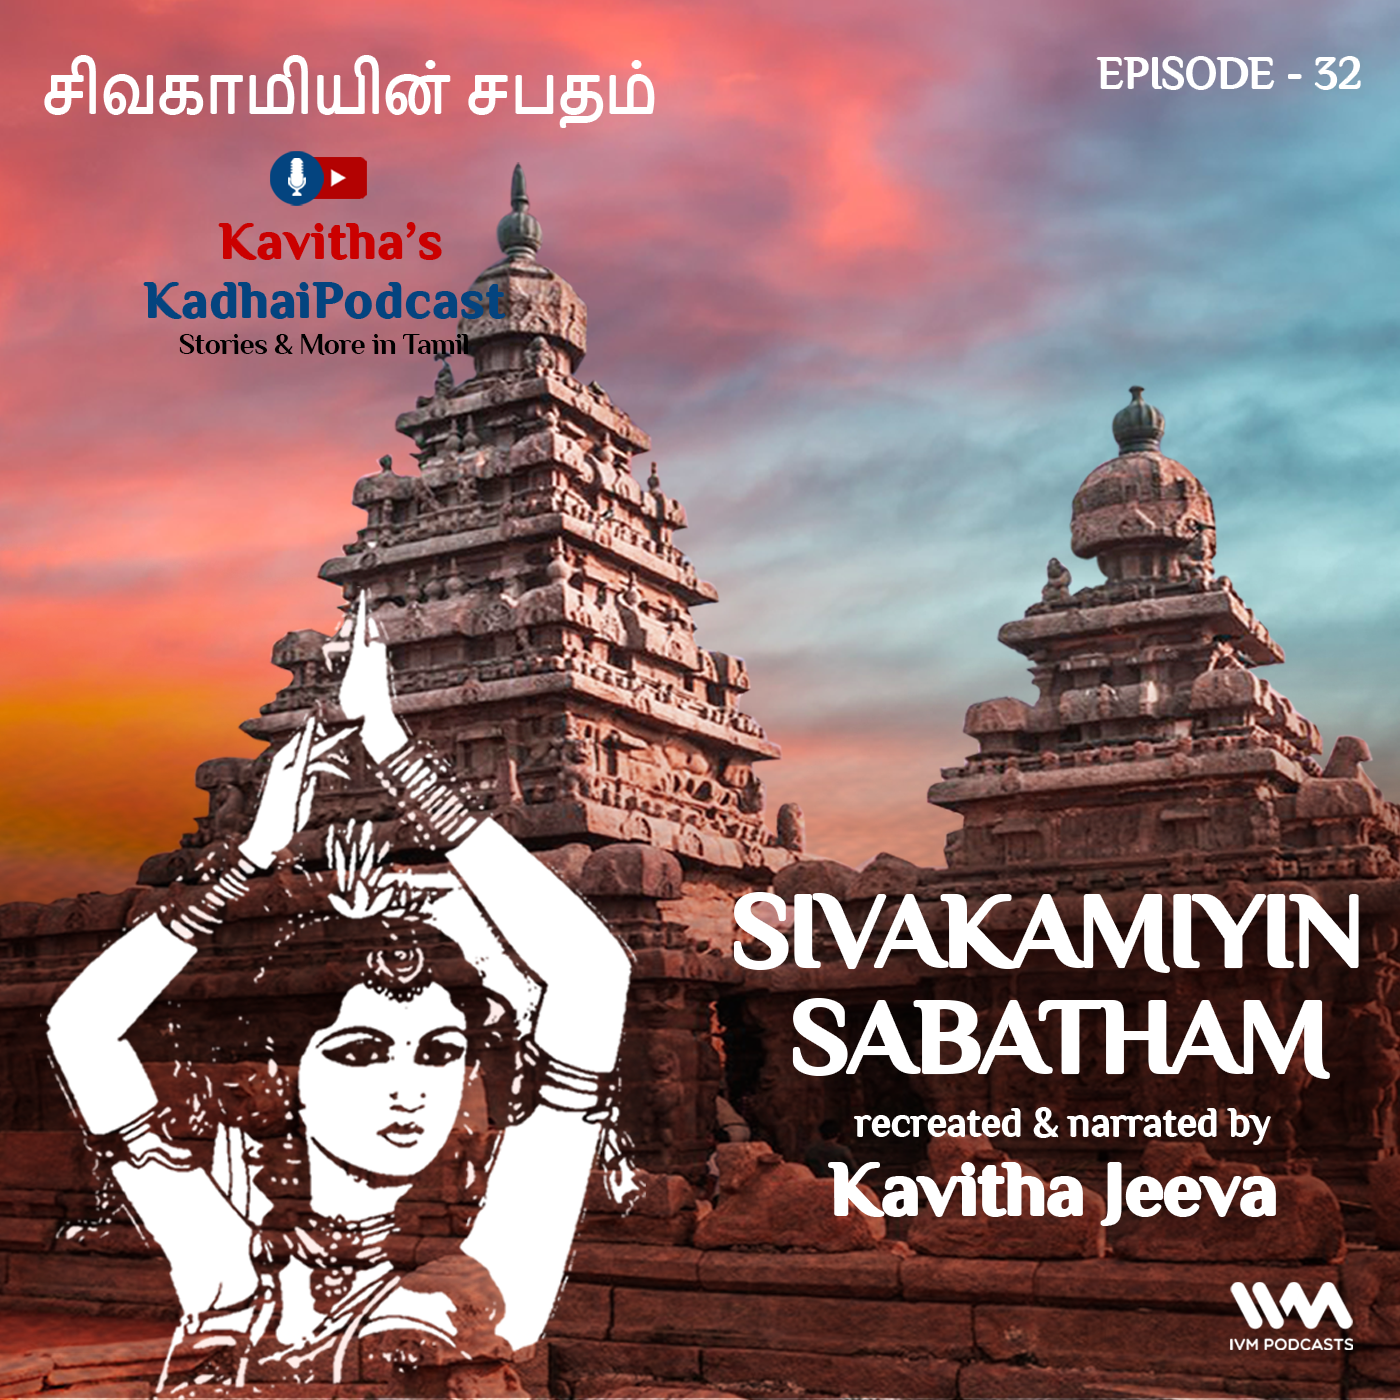 KadhaiPodcast's Sivakamiyin Sabatham - Episode # 32